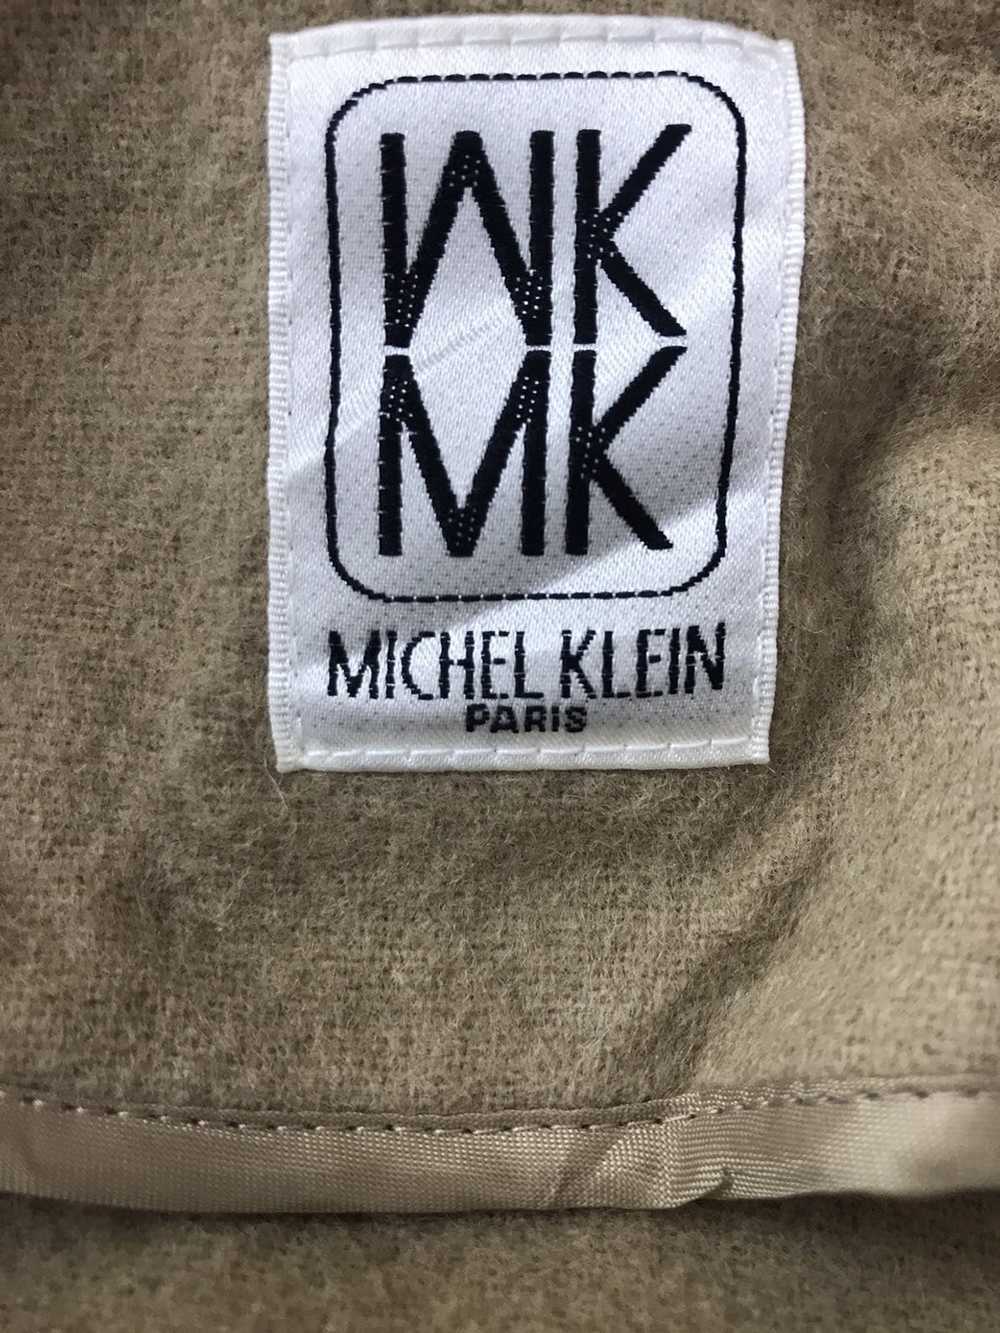 Michel Klein Michel Klein Paris Long Jacket - image 5